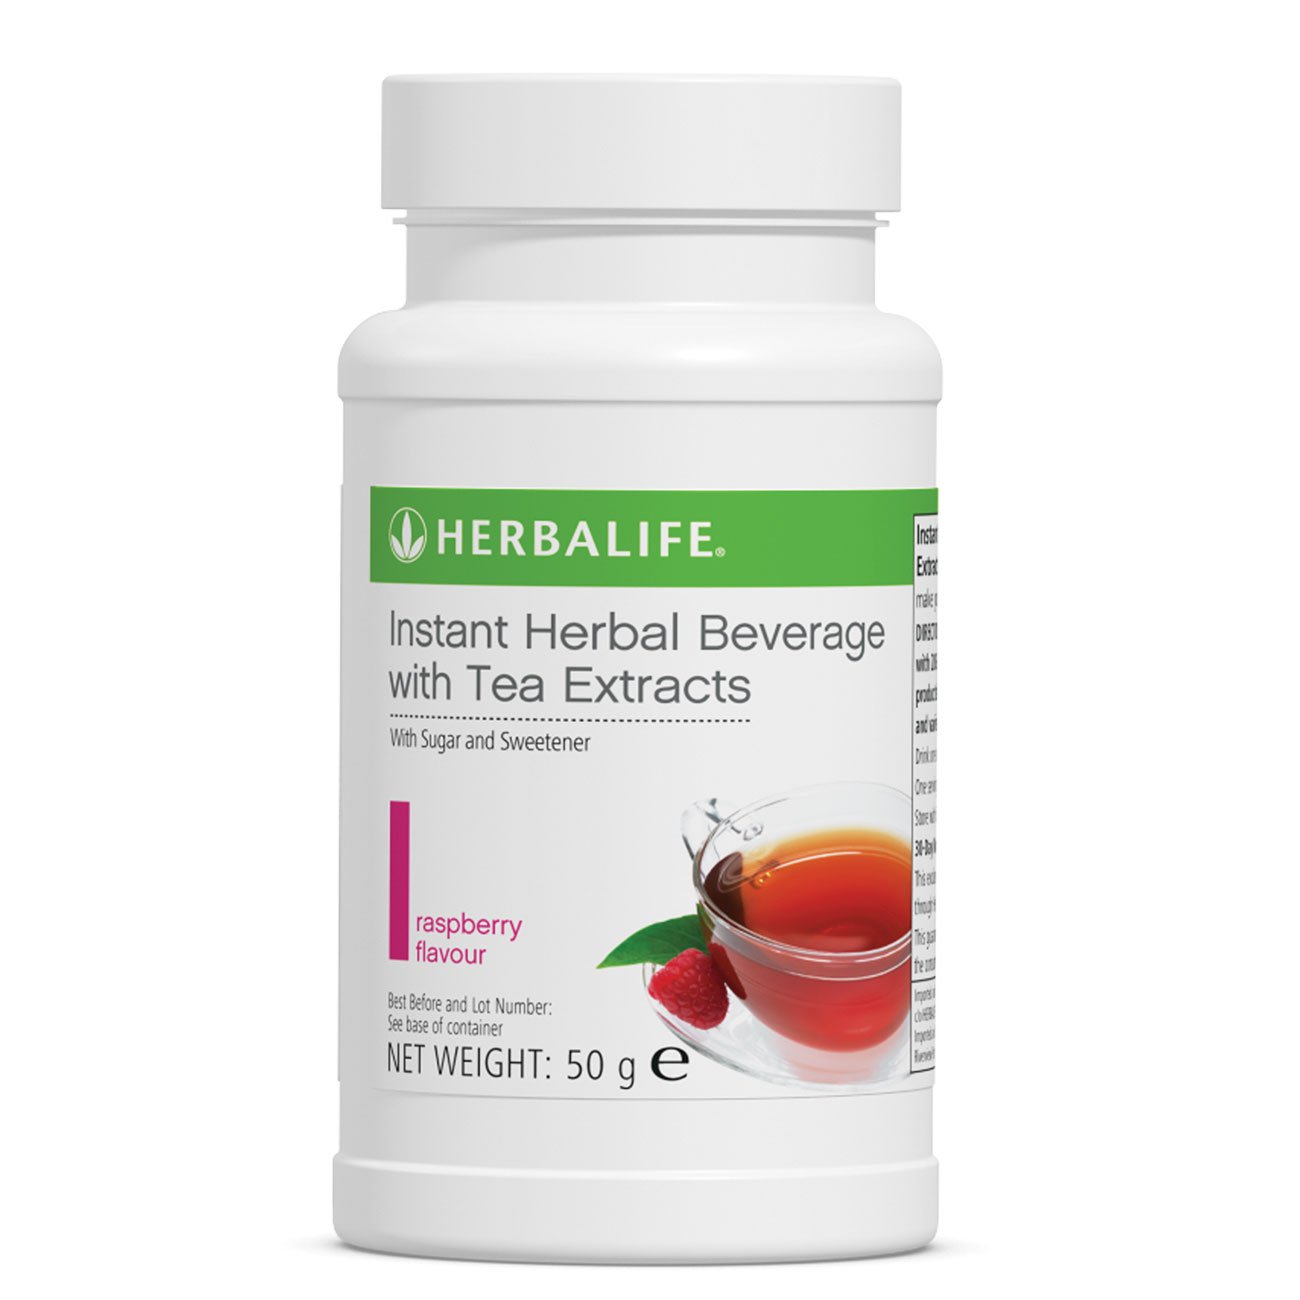 Instant Herbal Beverage  Raspberry product shot